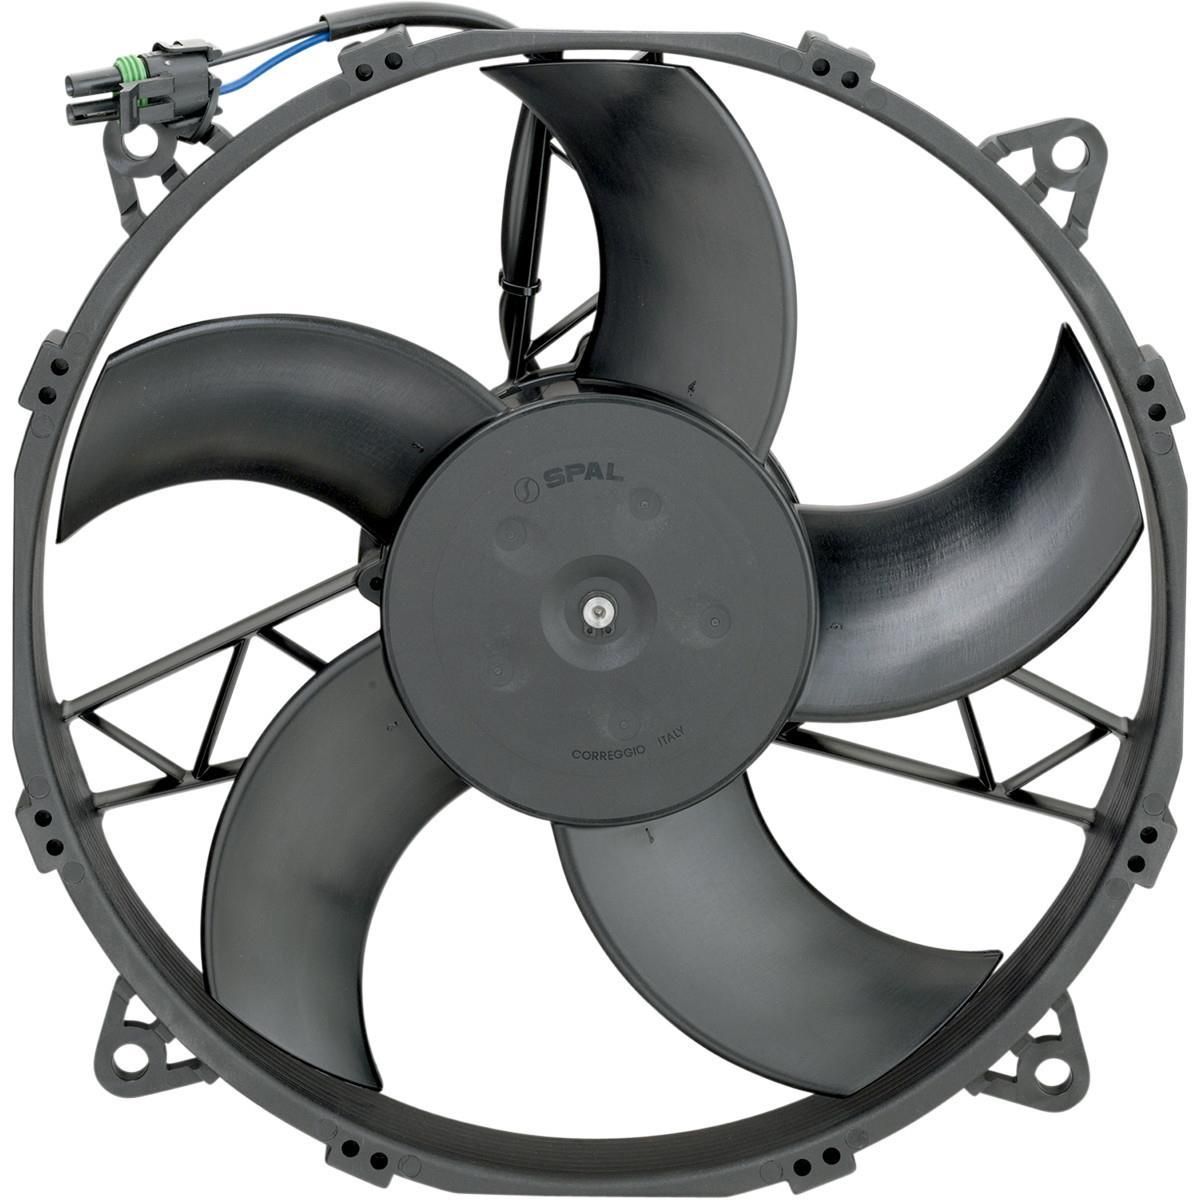 224C-MOOSE-UTILI-19010315 Hi-Performance Cooling Fan